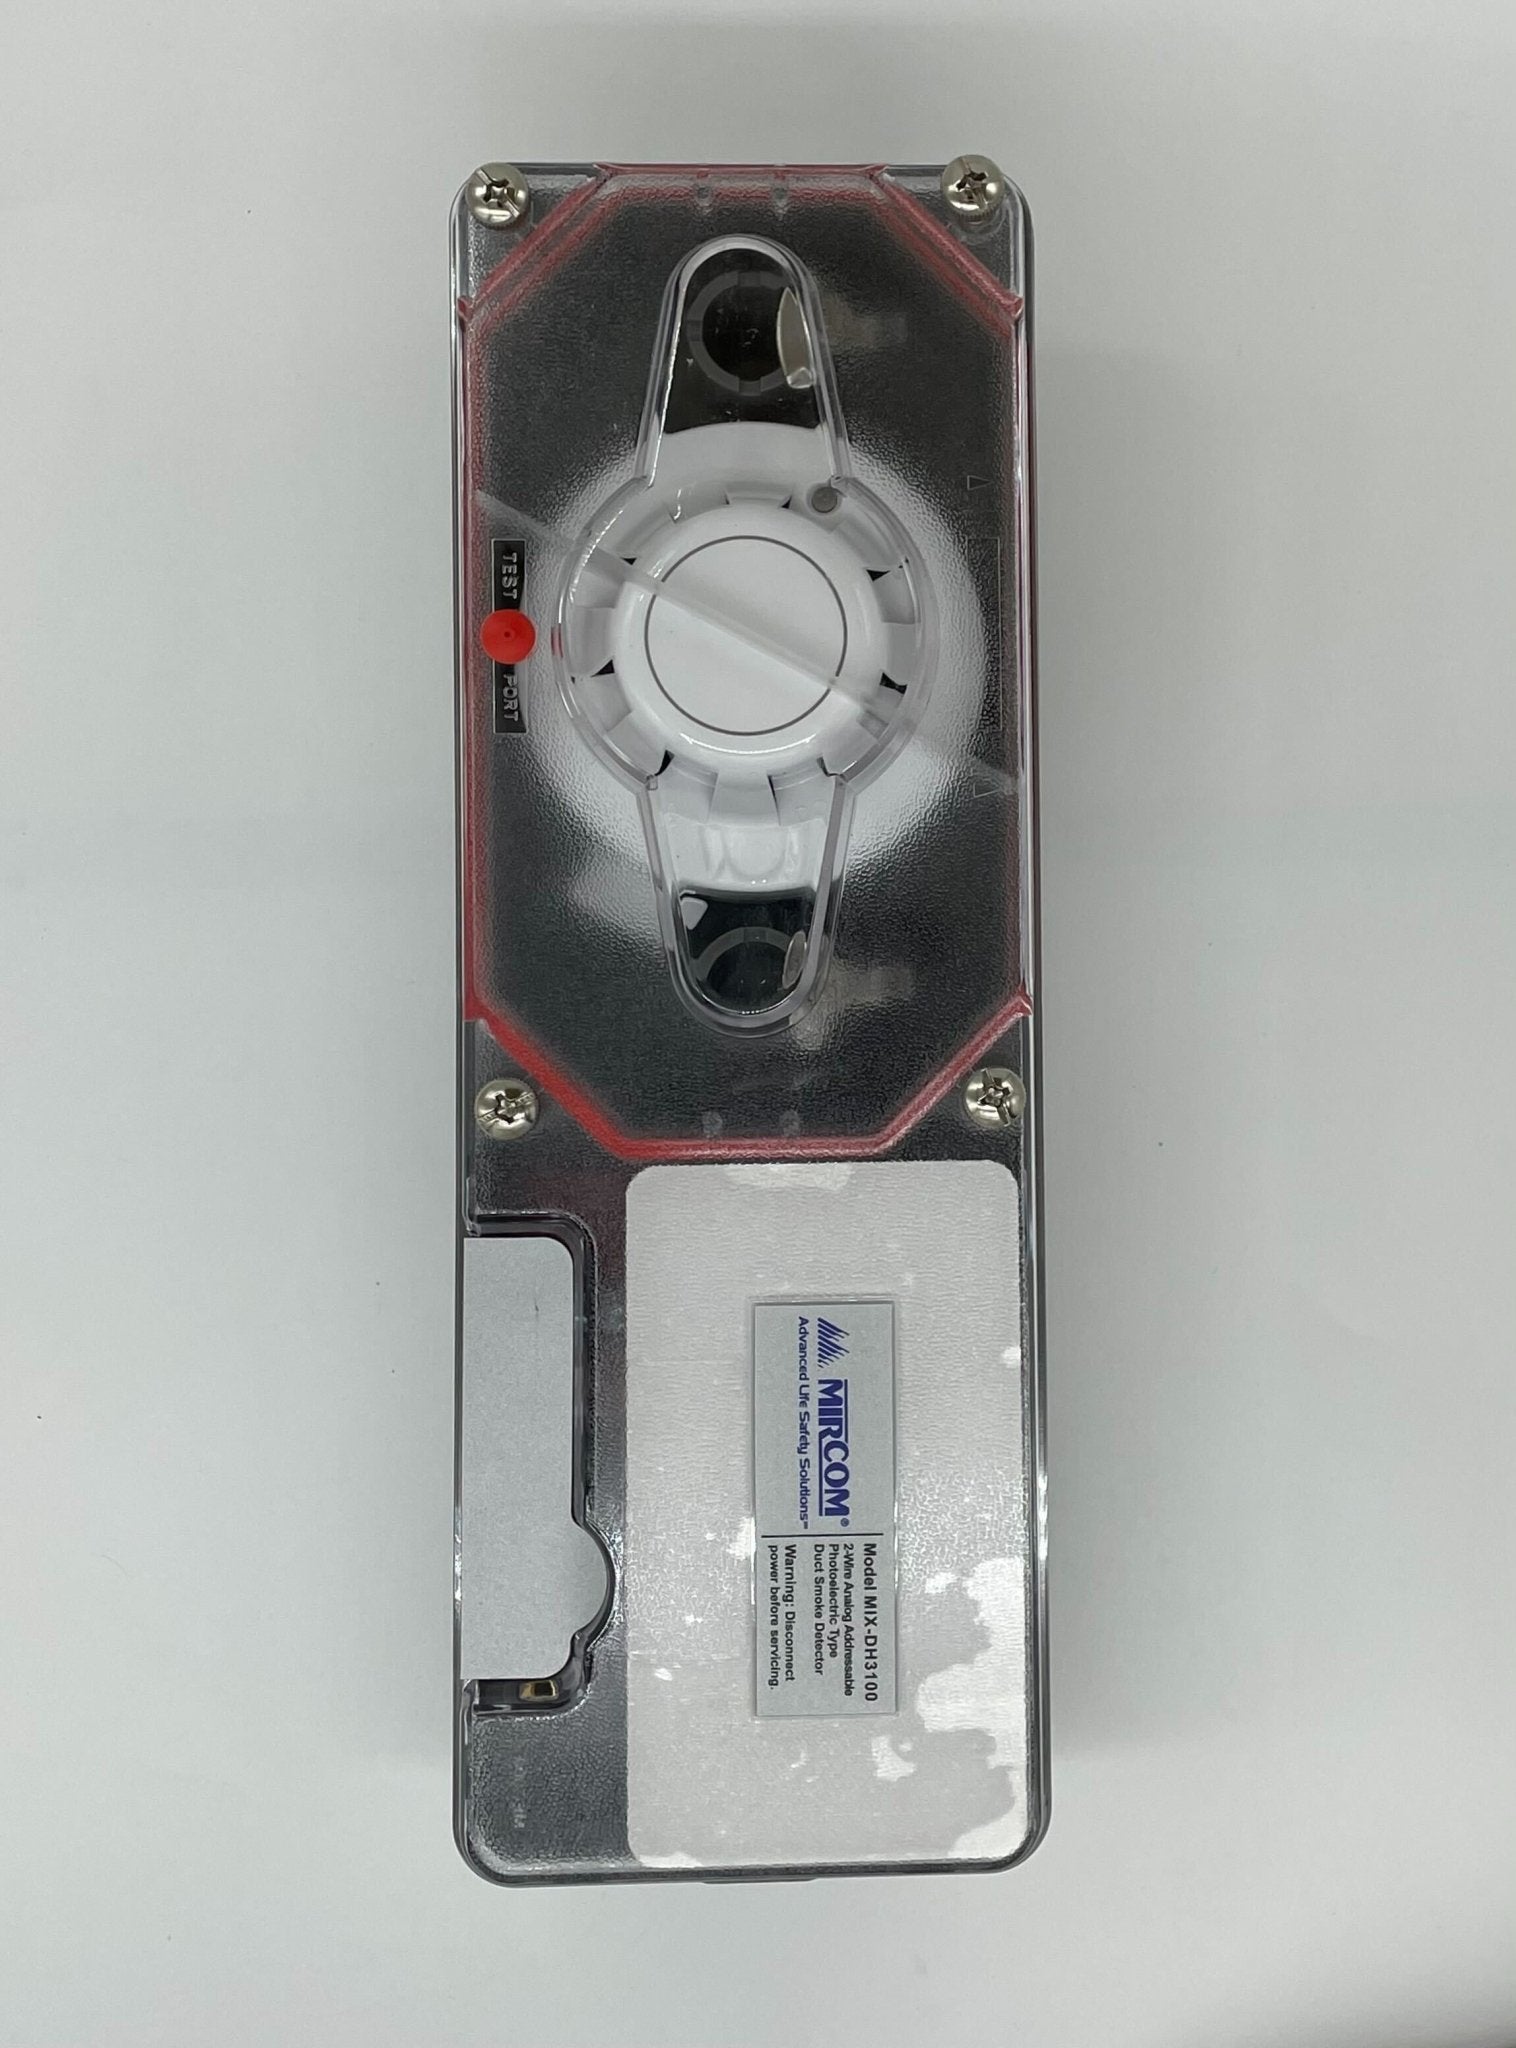 Mircom MIX-DH3100 Addressable Duct Smoke Detector - The Fire Alarm Supplier